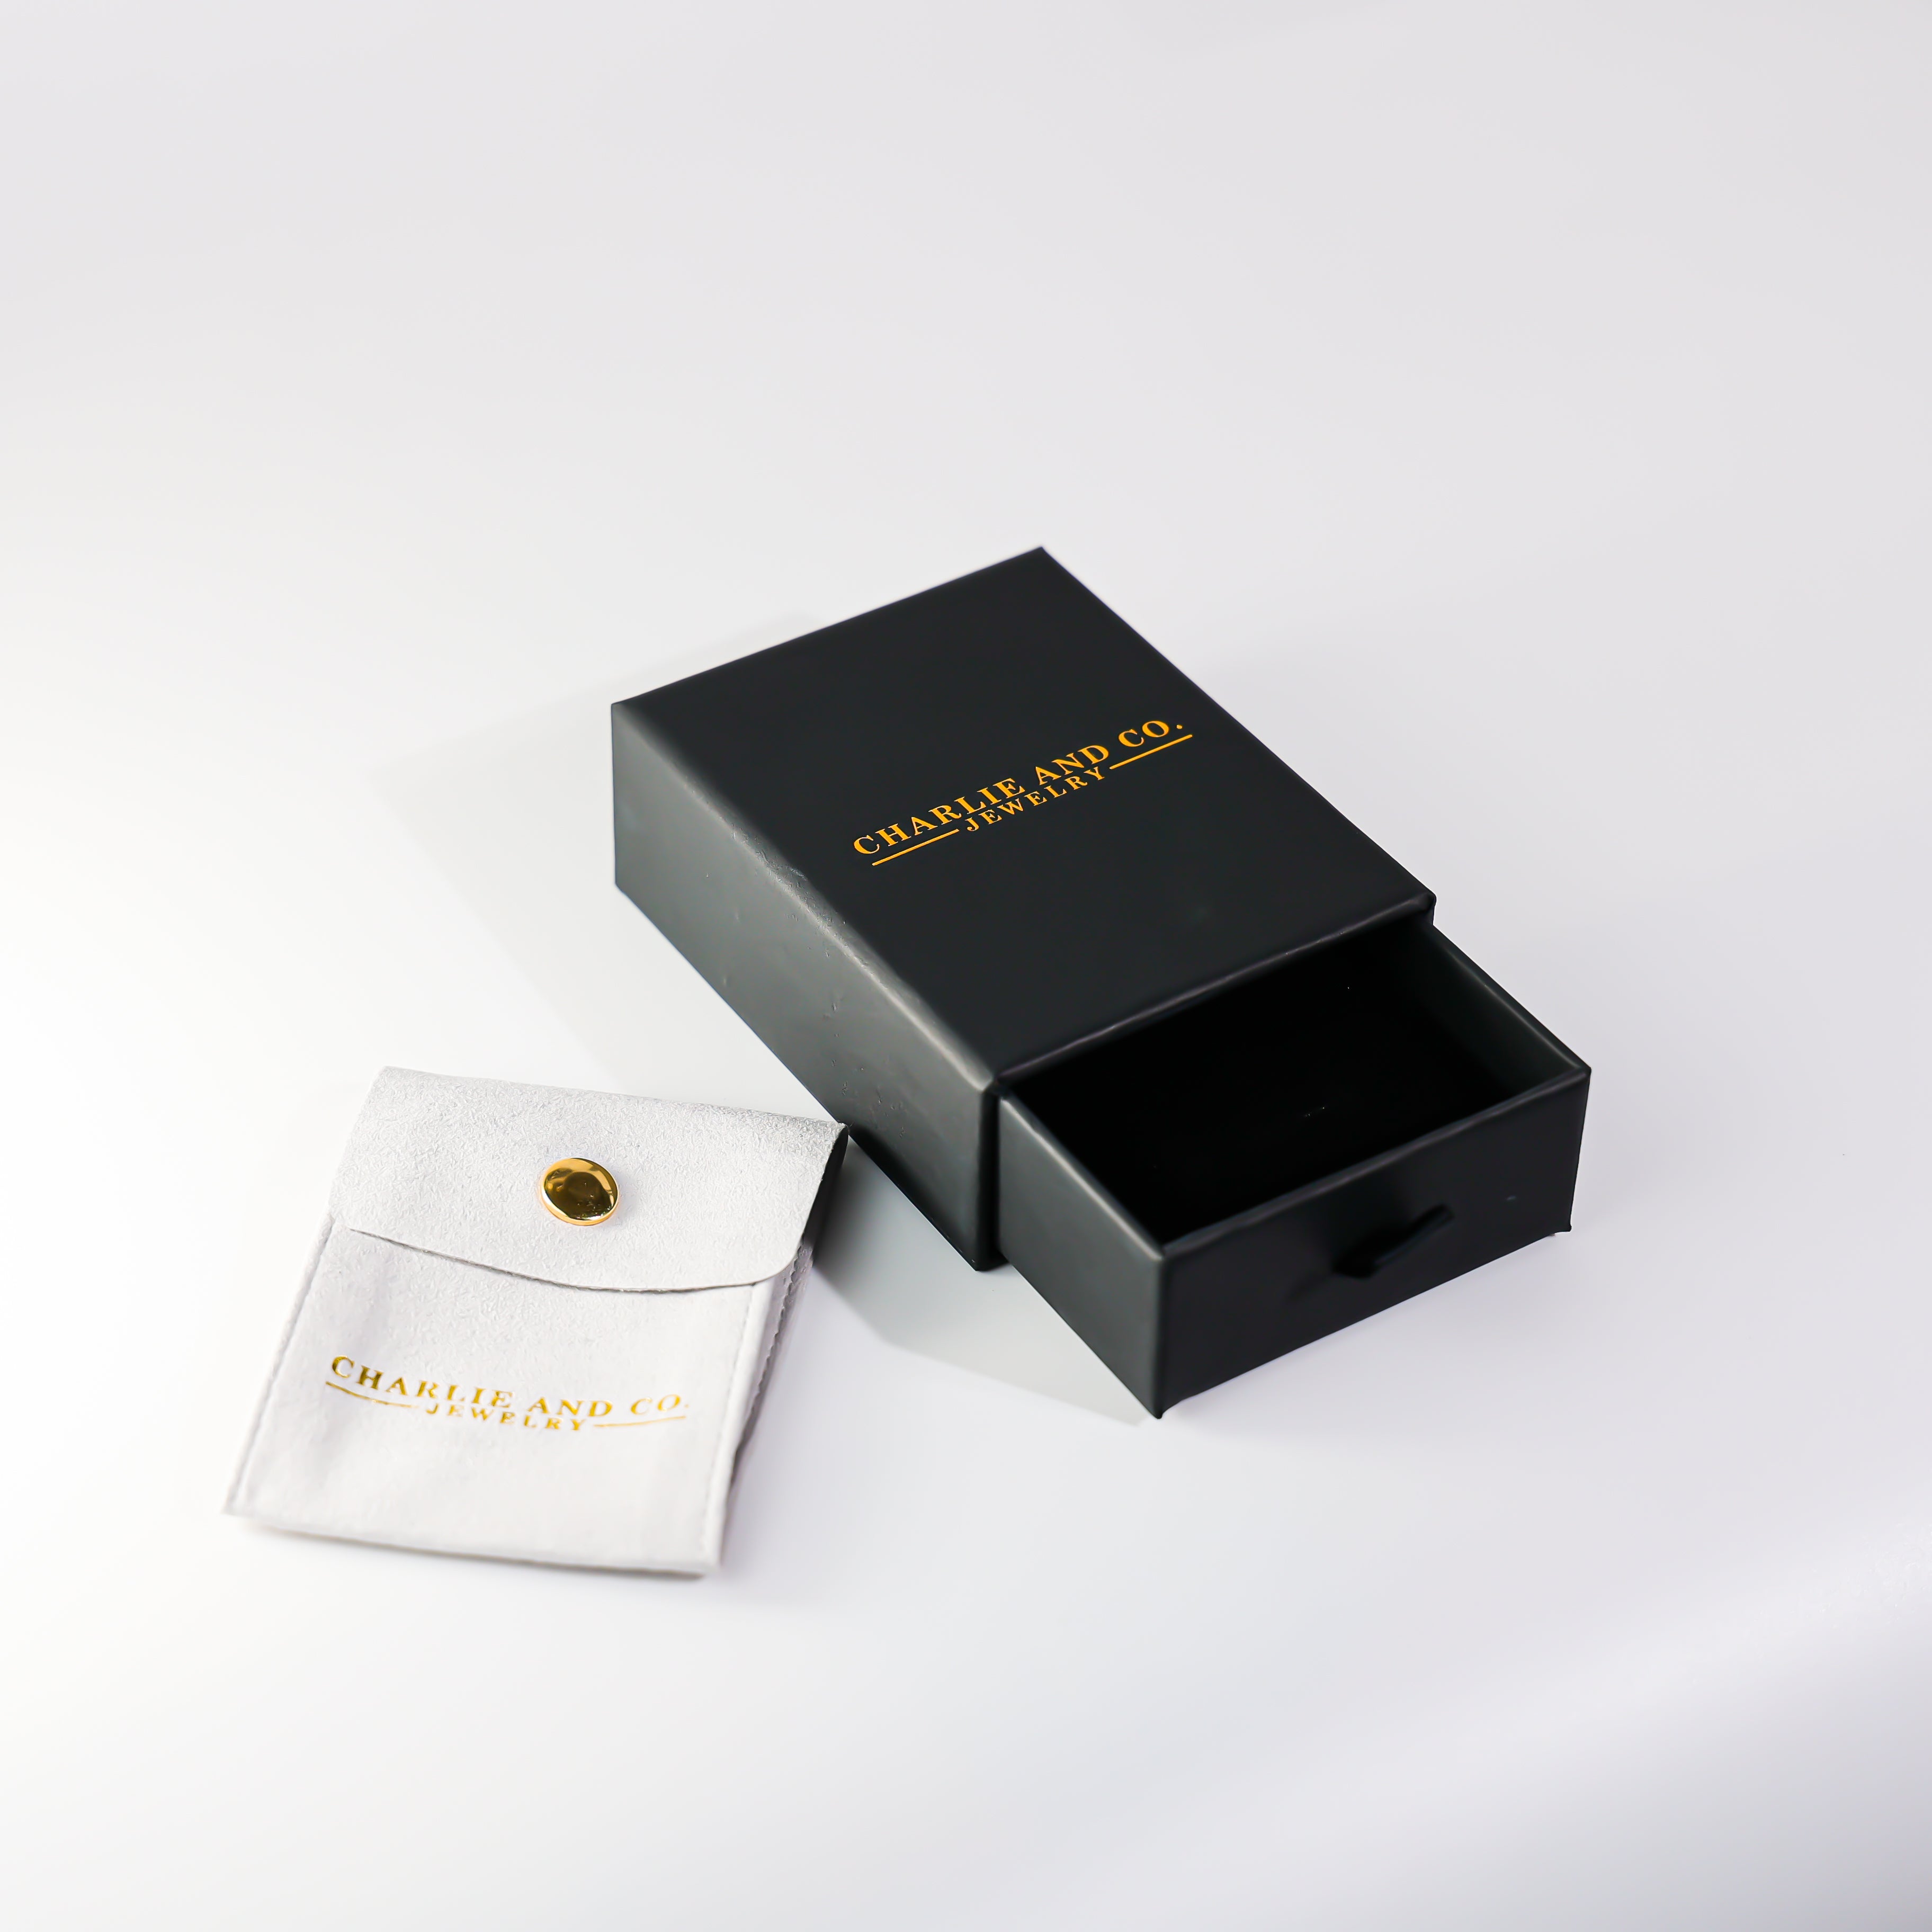 14K Gold Polished Elephant Pendant - Charlie & Co. Jewelry